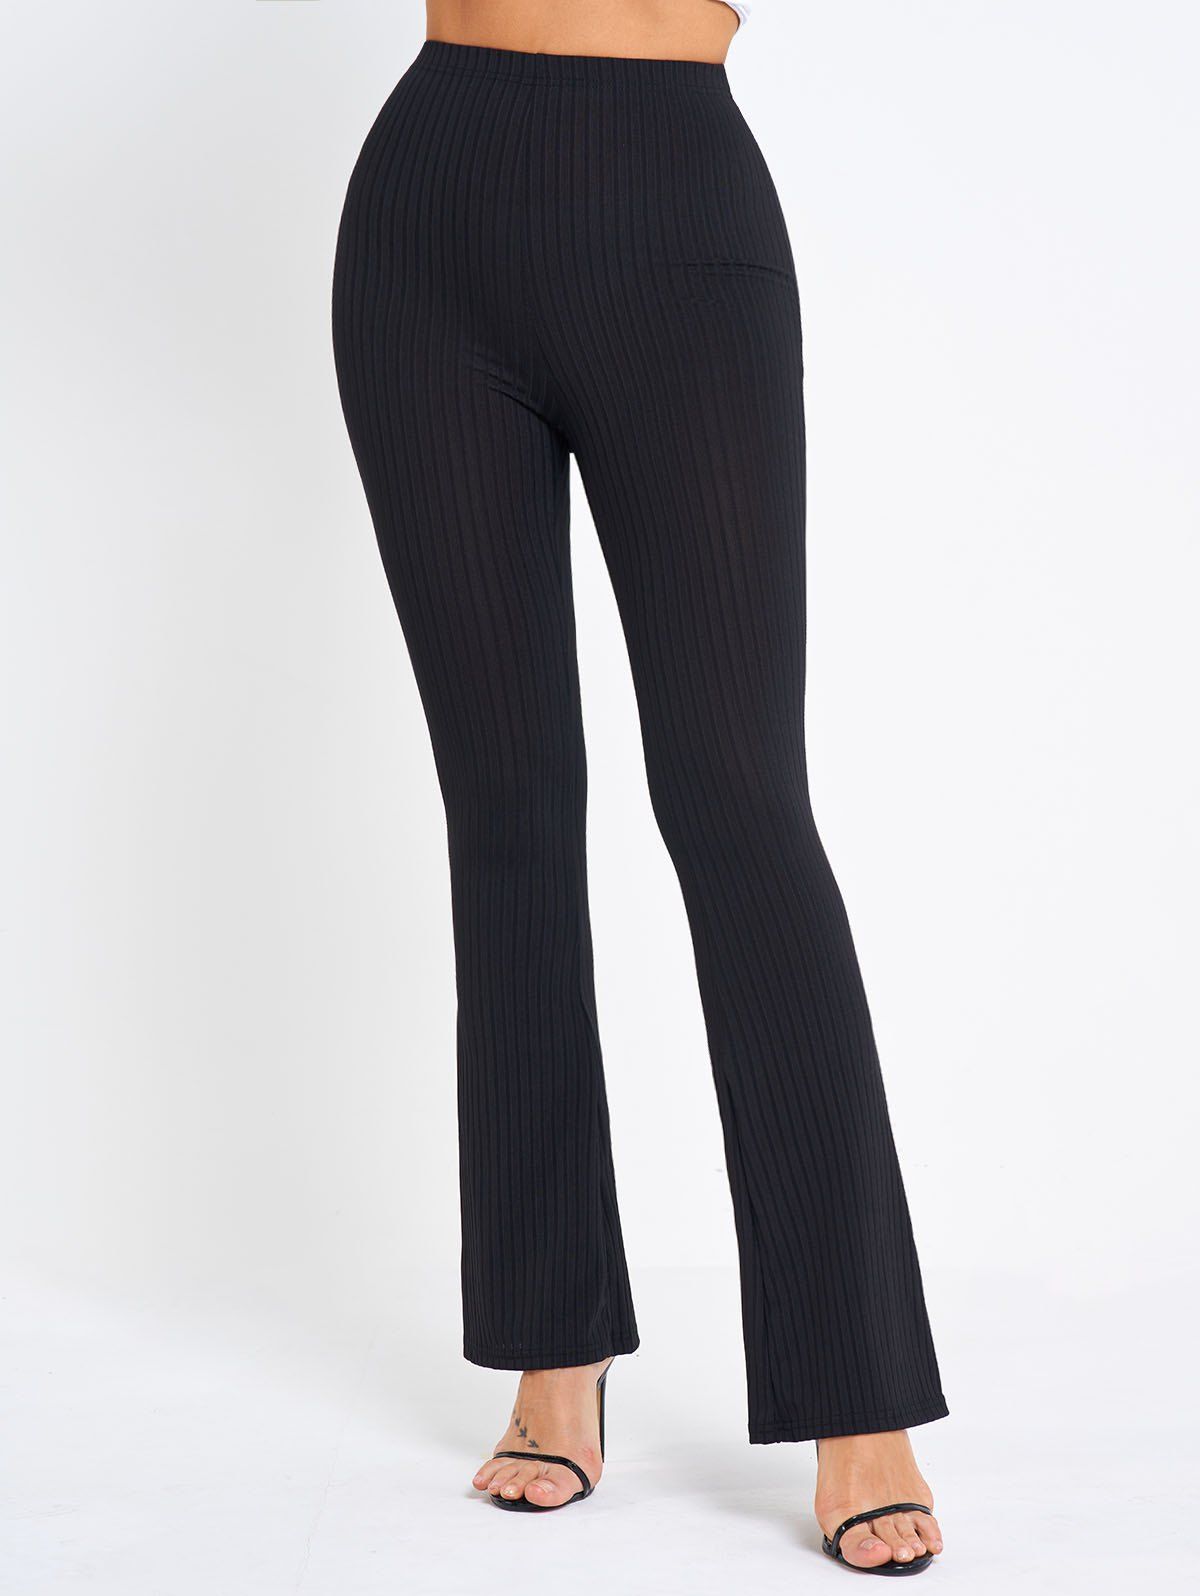 Textured Flare Pants Elastic High Waisted Plain Color Long Pants - BLACK M